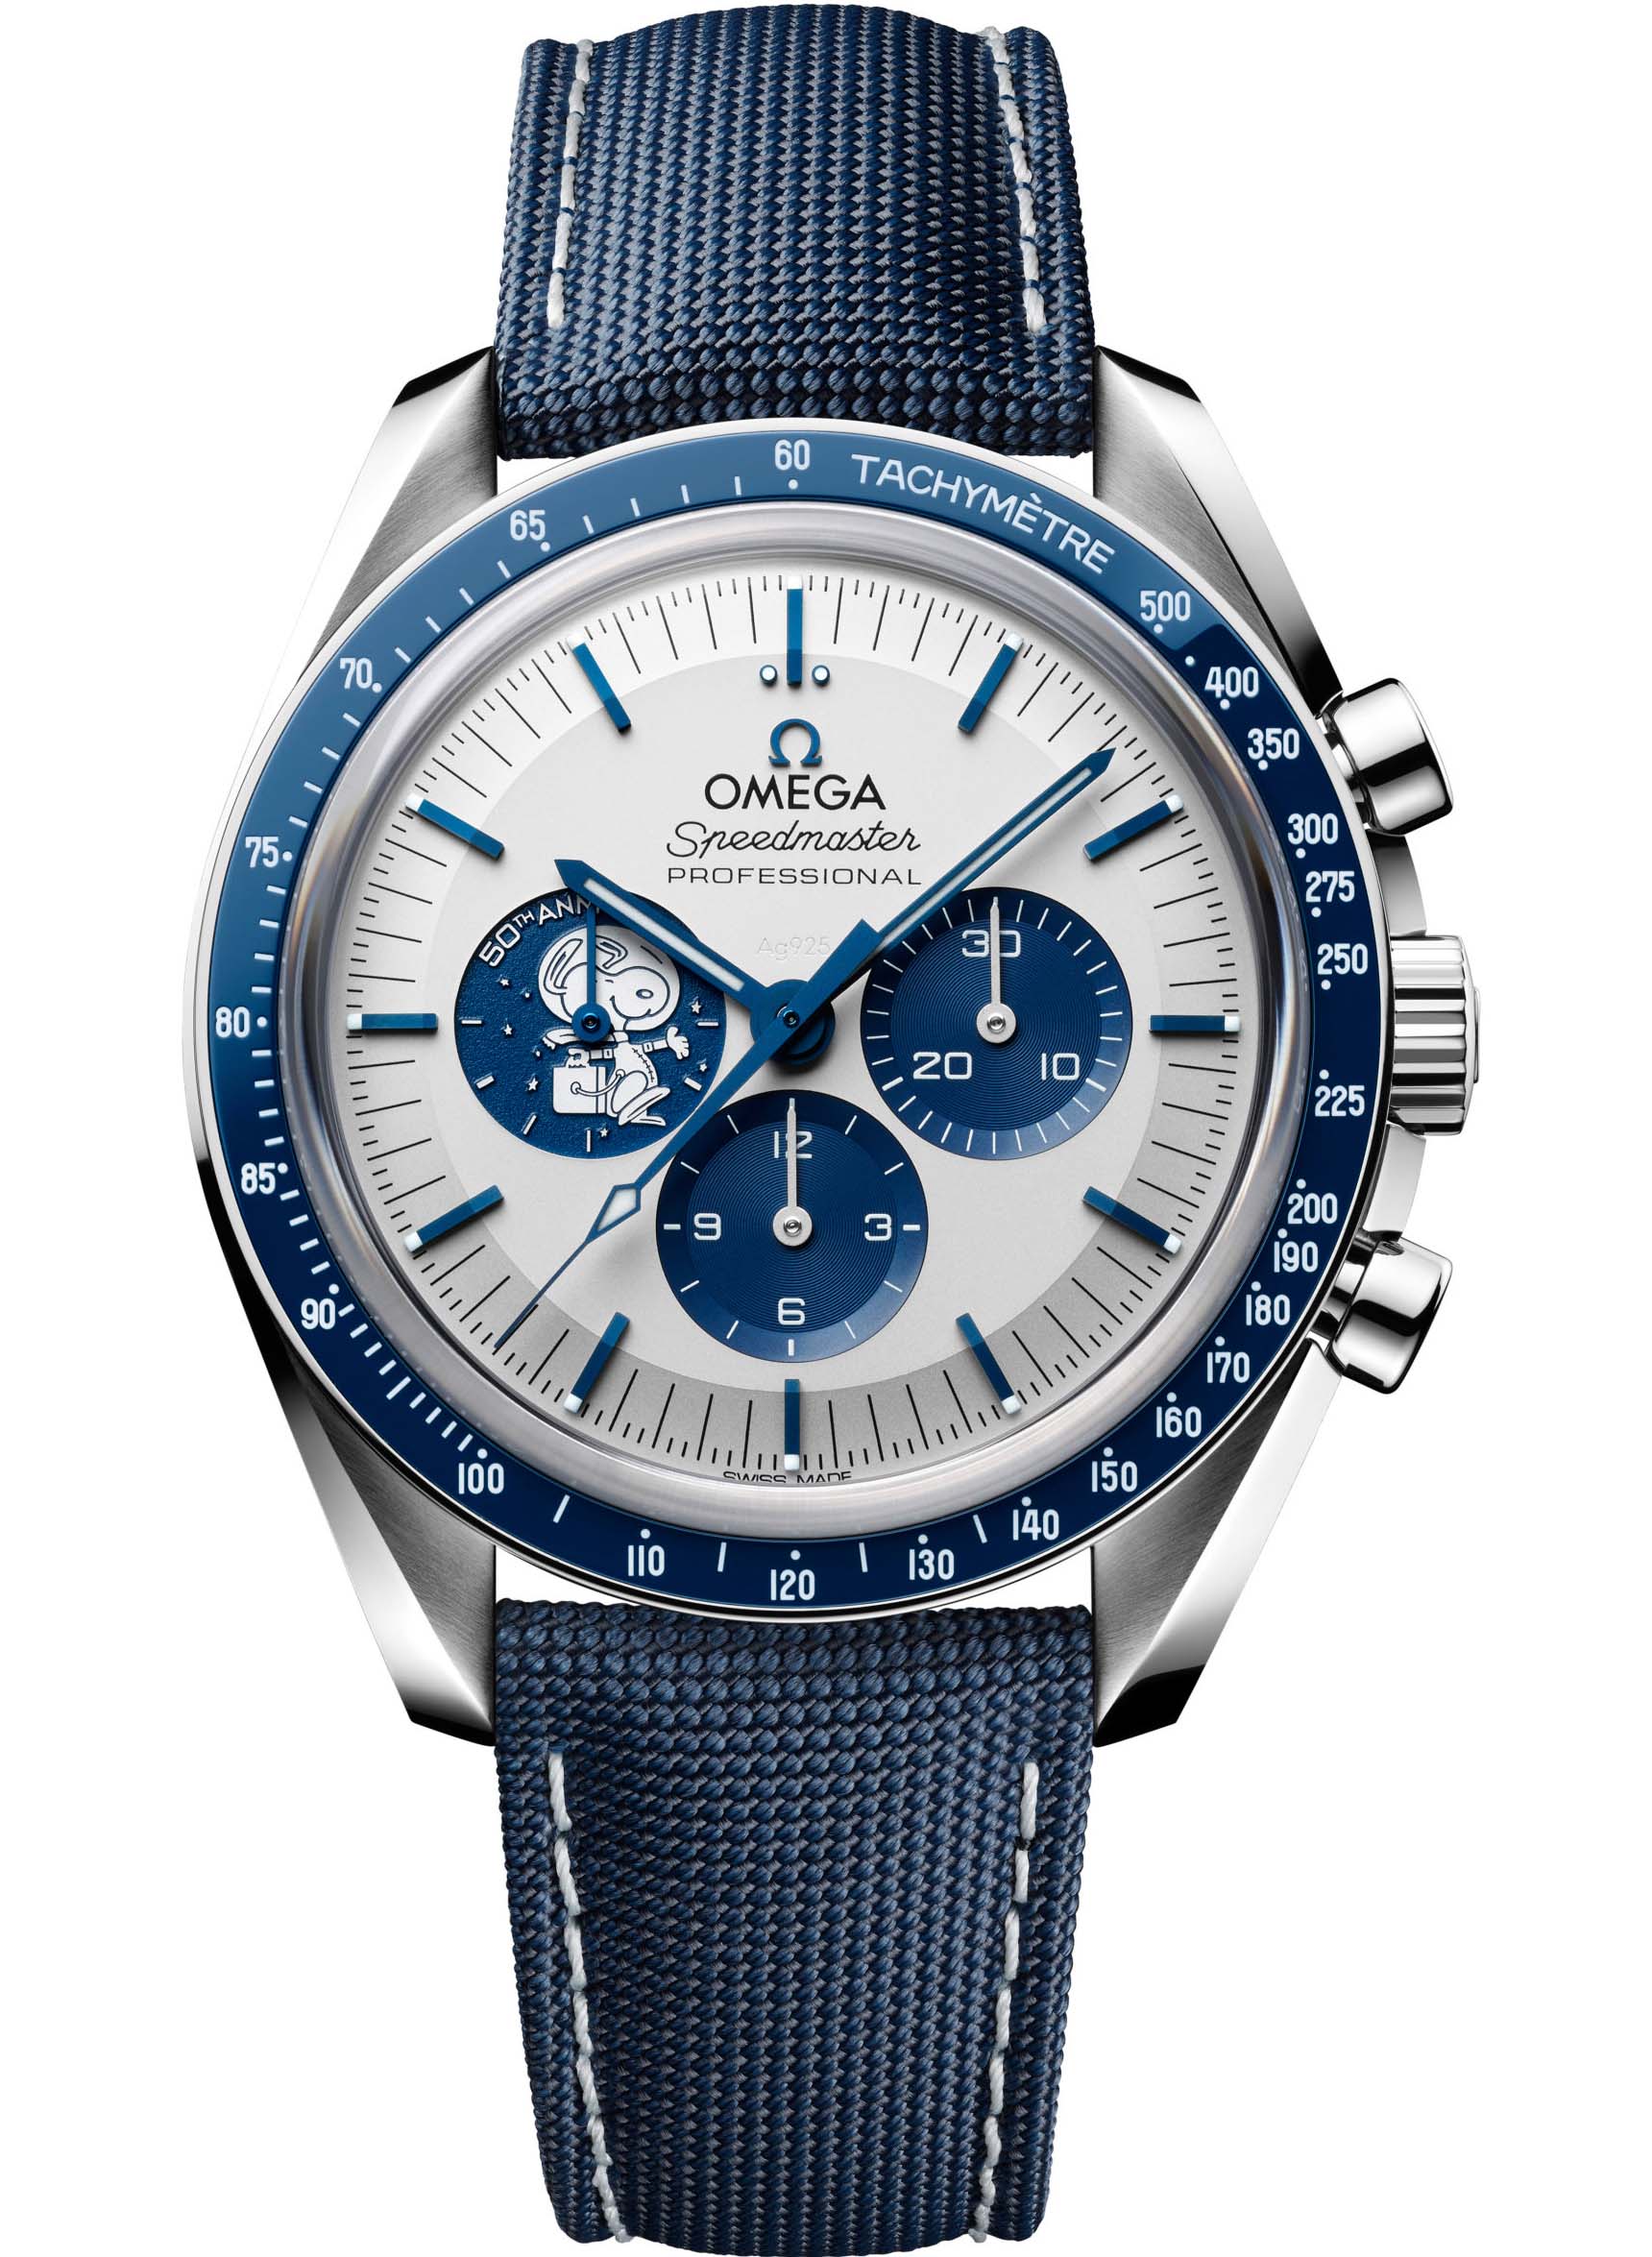 50th anniversary omega watch